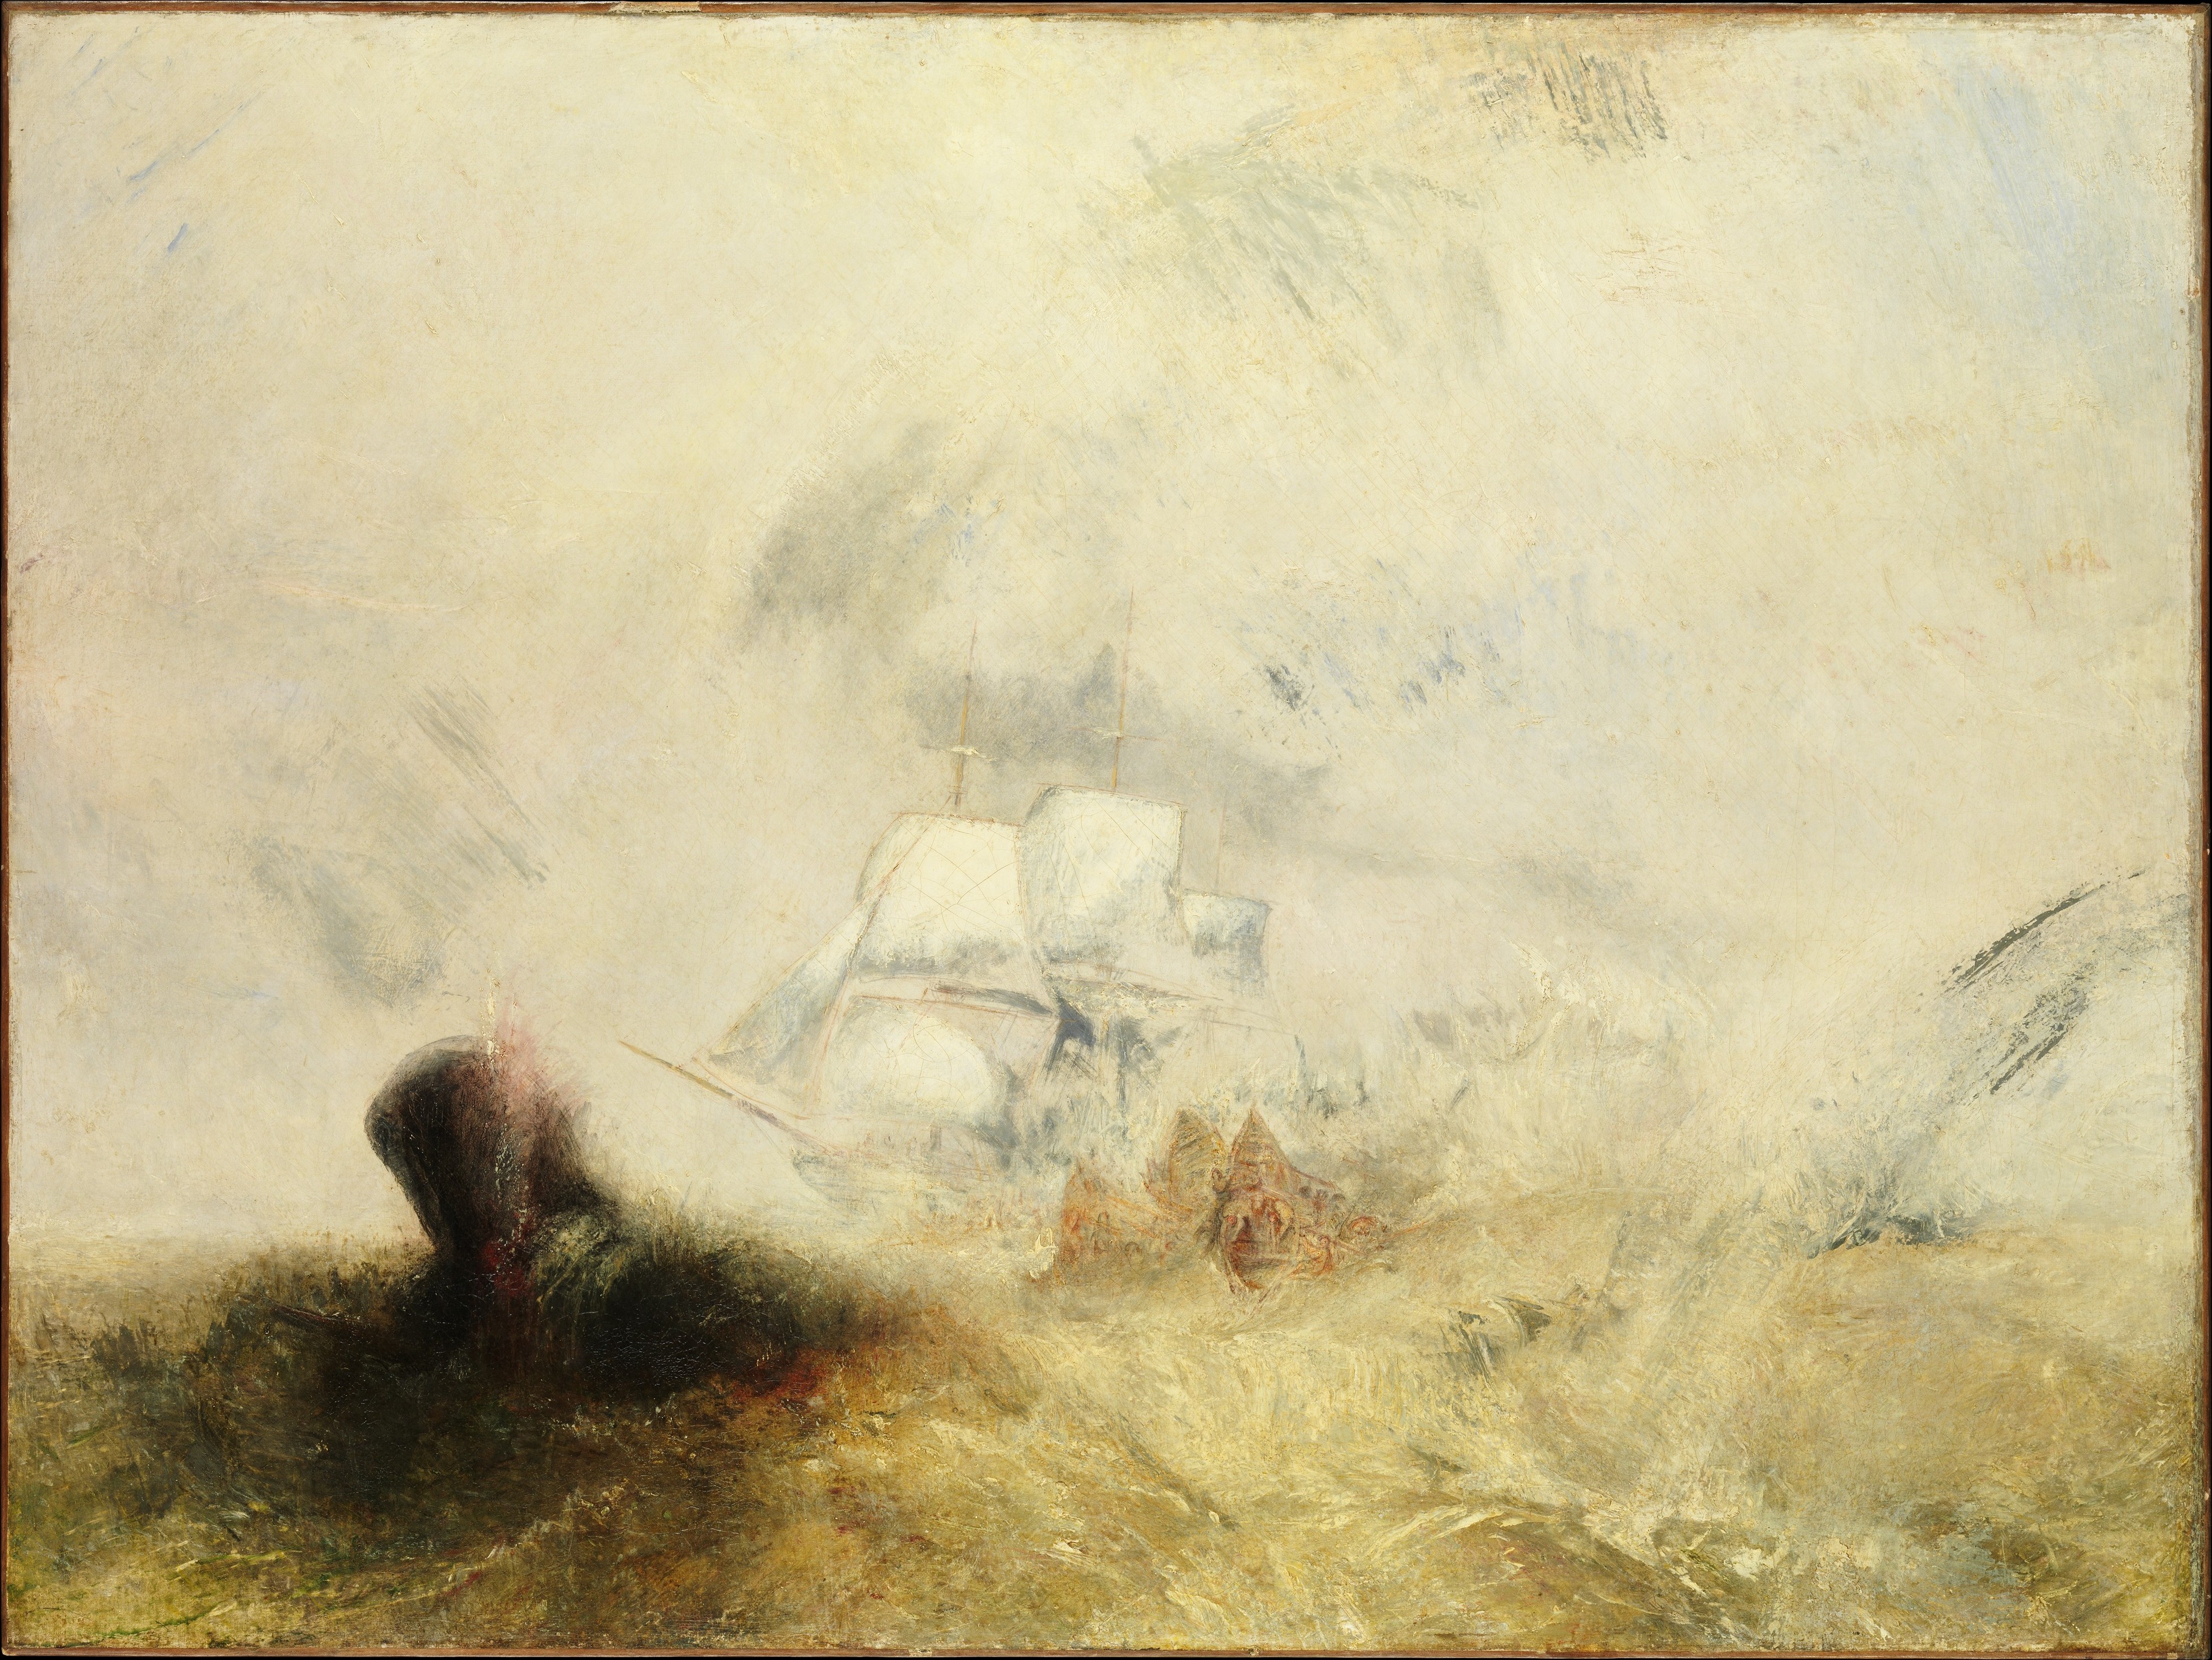 捕鯨船 by Joseph Mallord William Turner - 1845 - 91.8 x 122.6厘米 